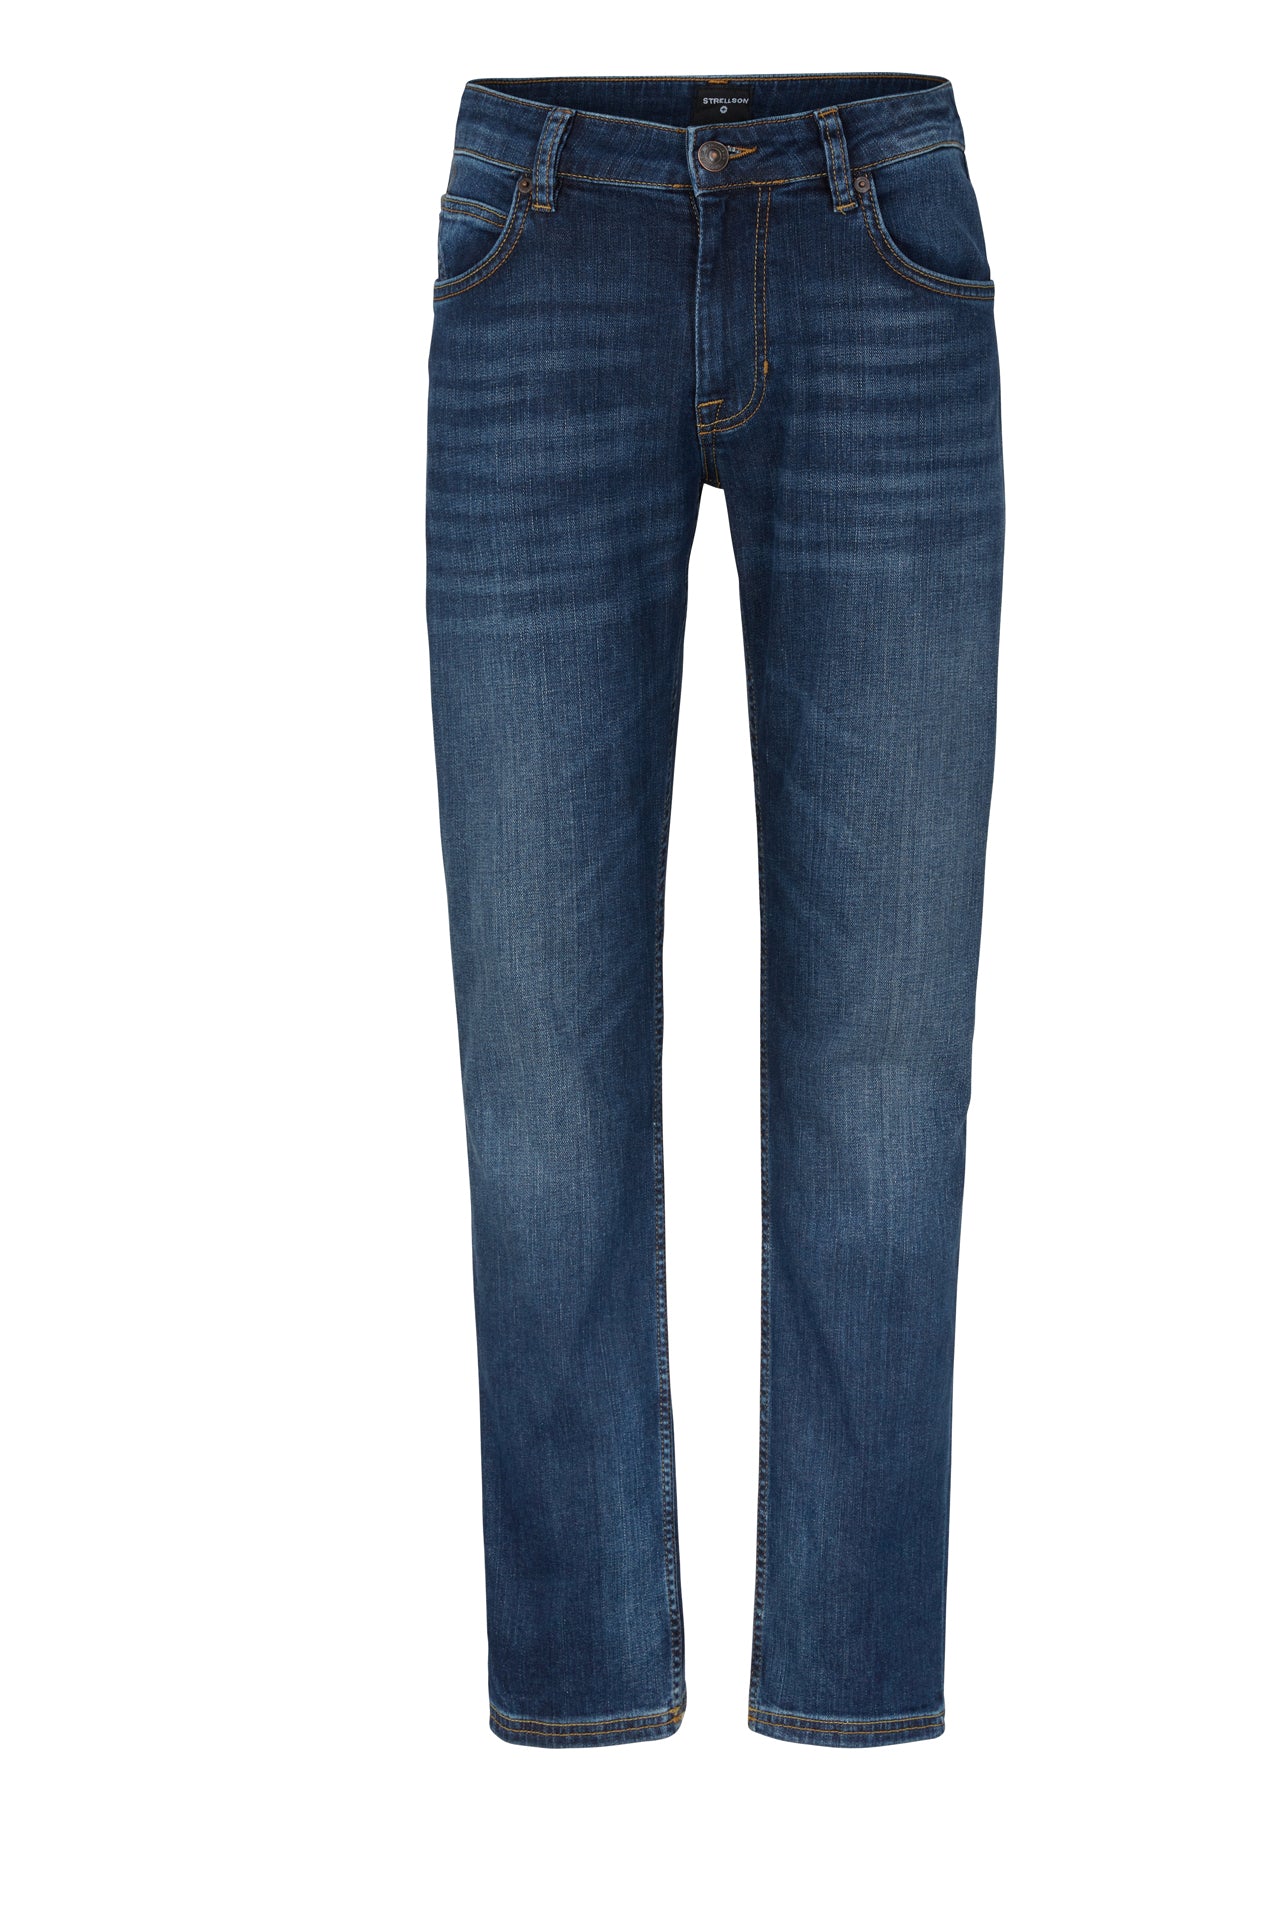 STRELLSON Flex Cross Jeans-Robin, Blue Denim